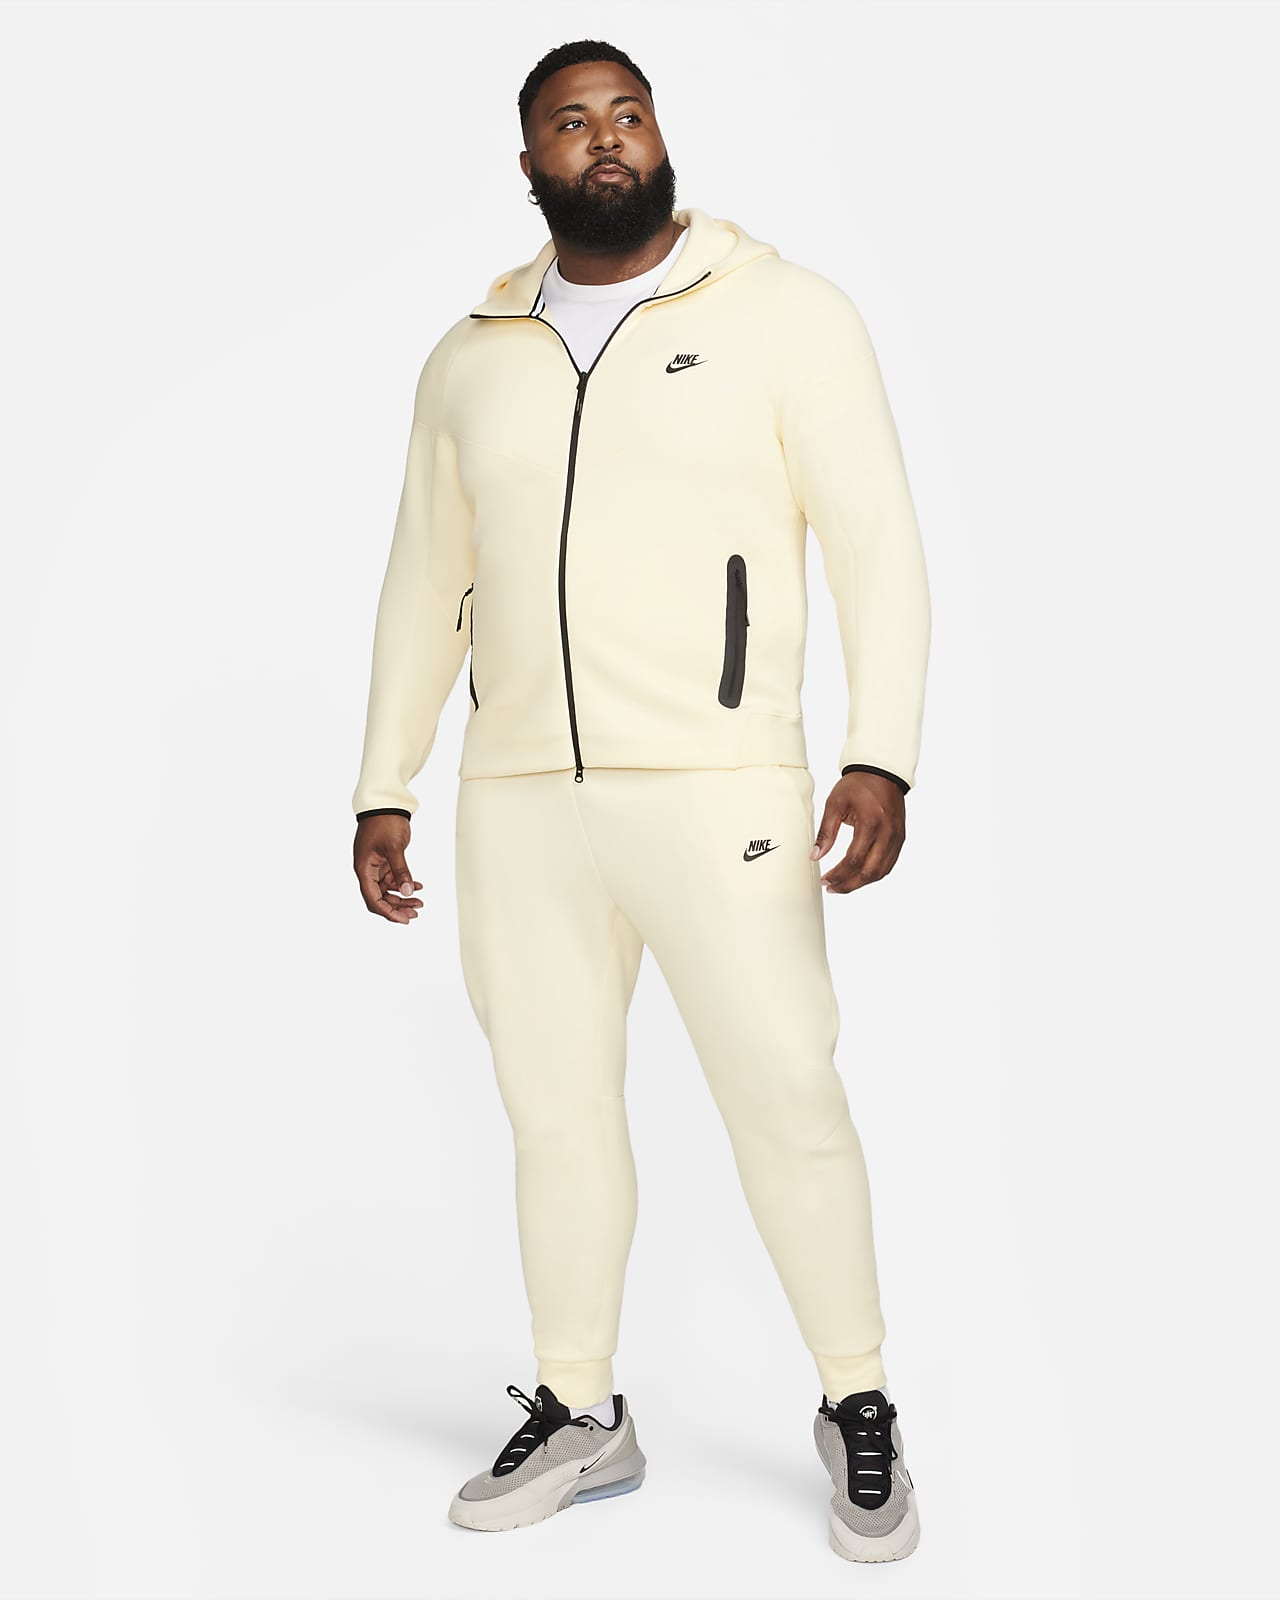 Men's Activewear by   Nike tech fleece, Mens activewear, Nike tech